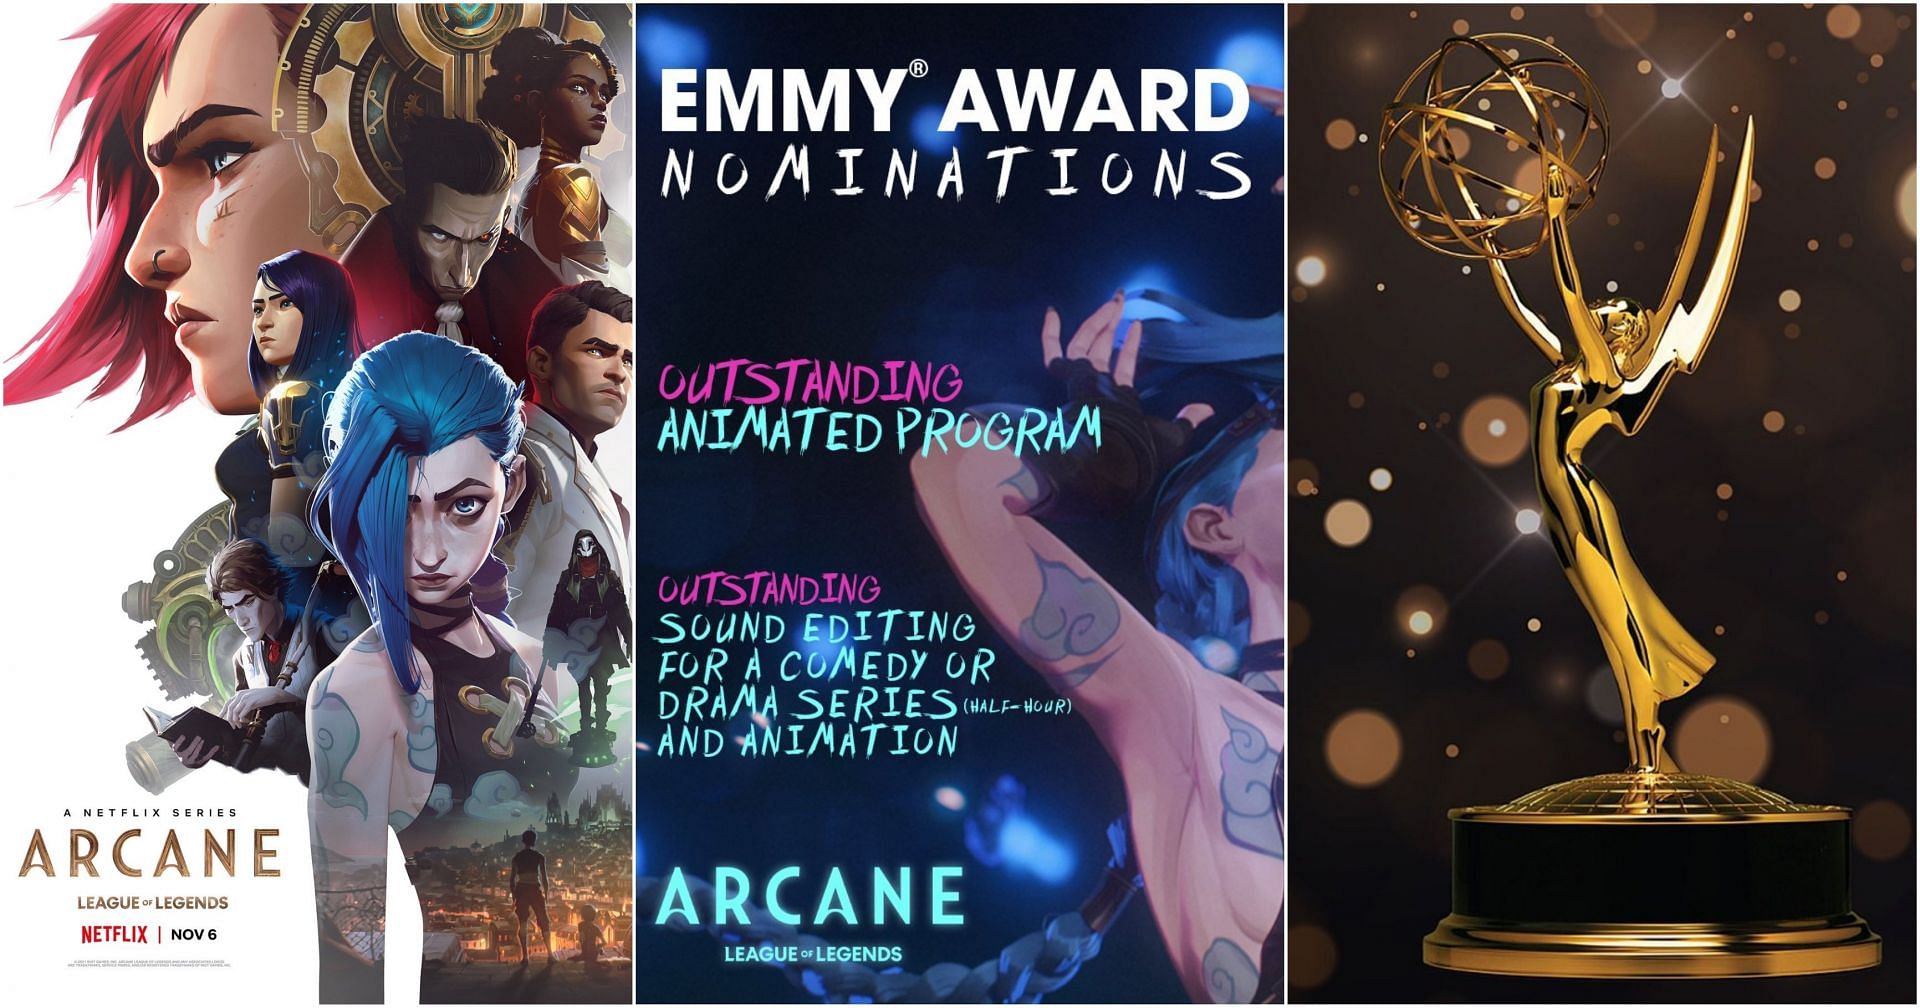 Arcane is nominated for two Creative Arts Emmy Awards (Image via Netflix)